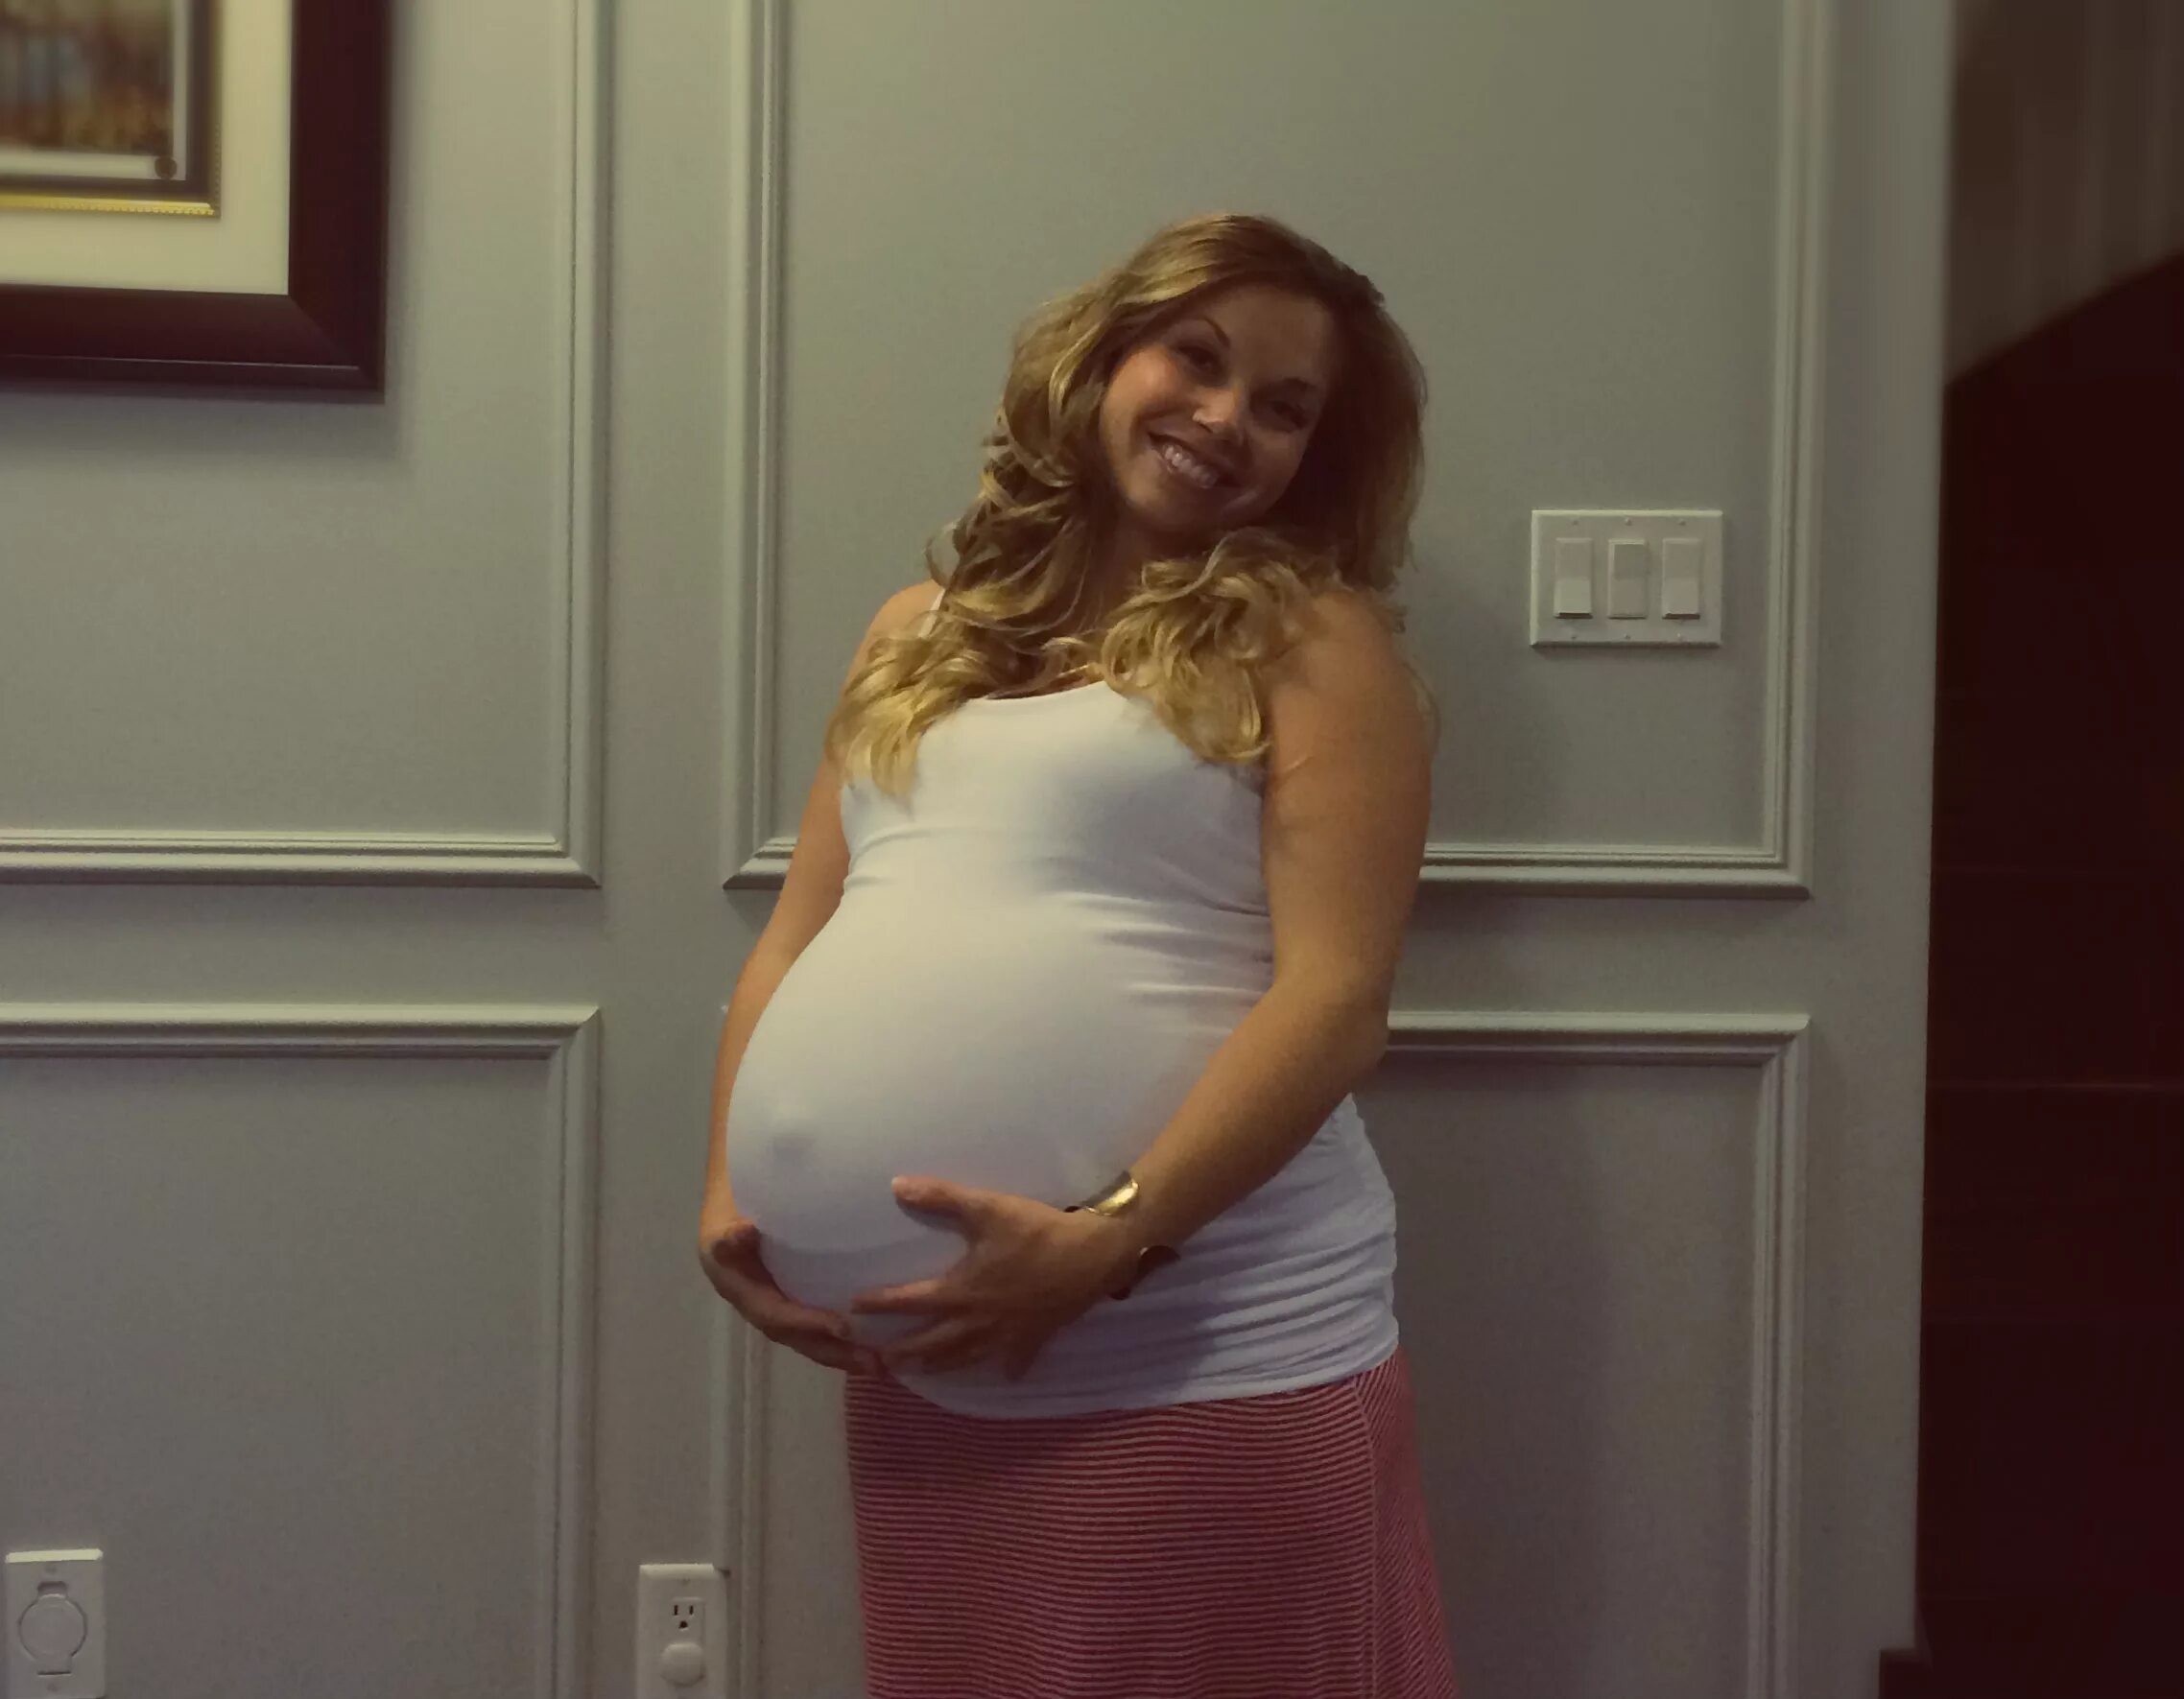 Woman impregnated. Девушка беременна двойней. Гигантские животы беременных. Беременные двойней на 9 месяце.